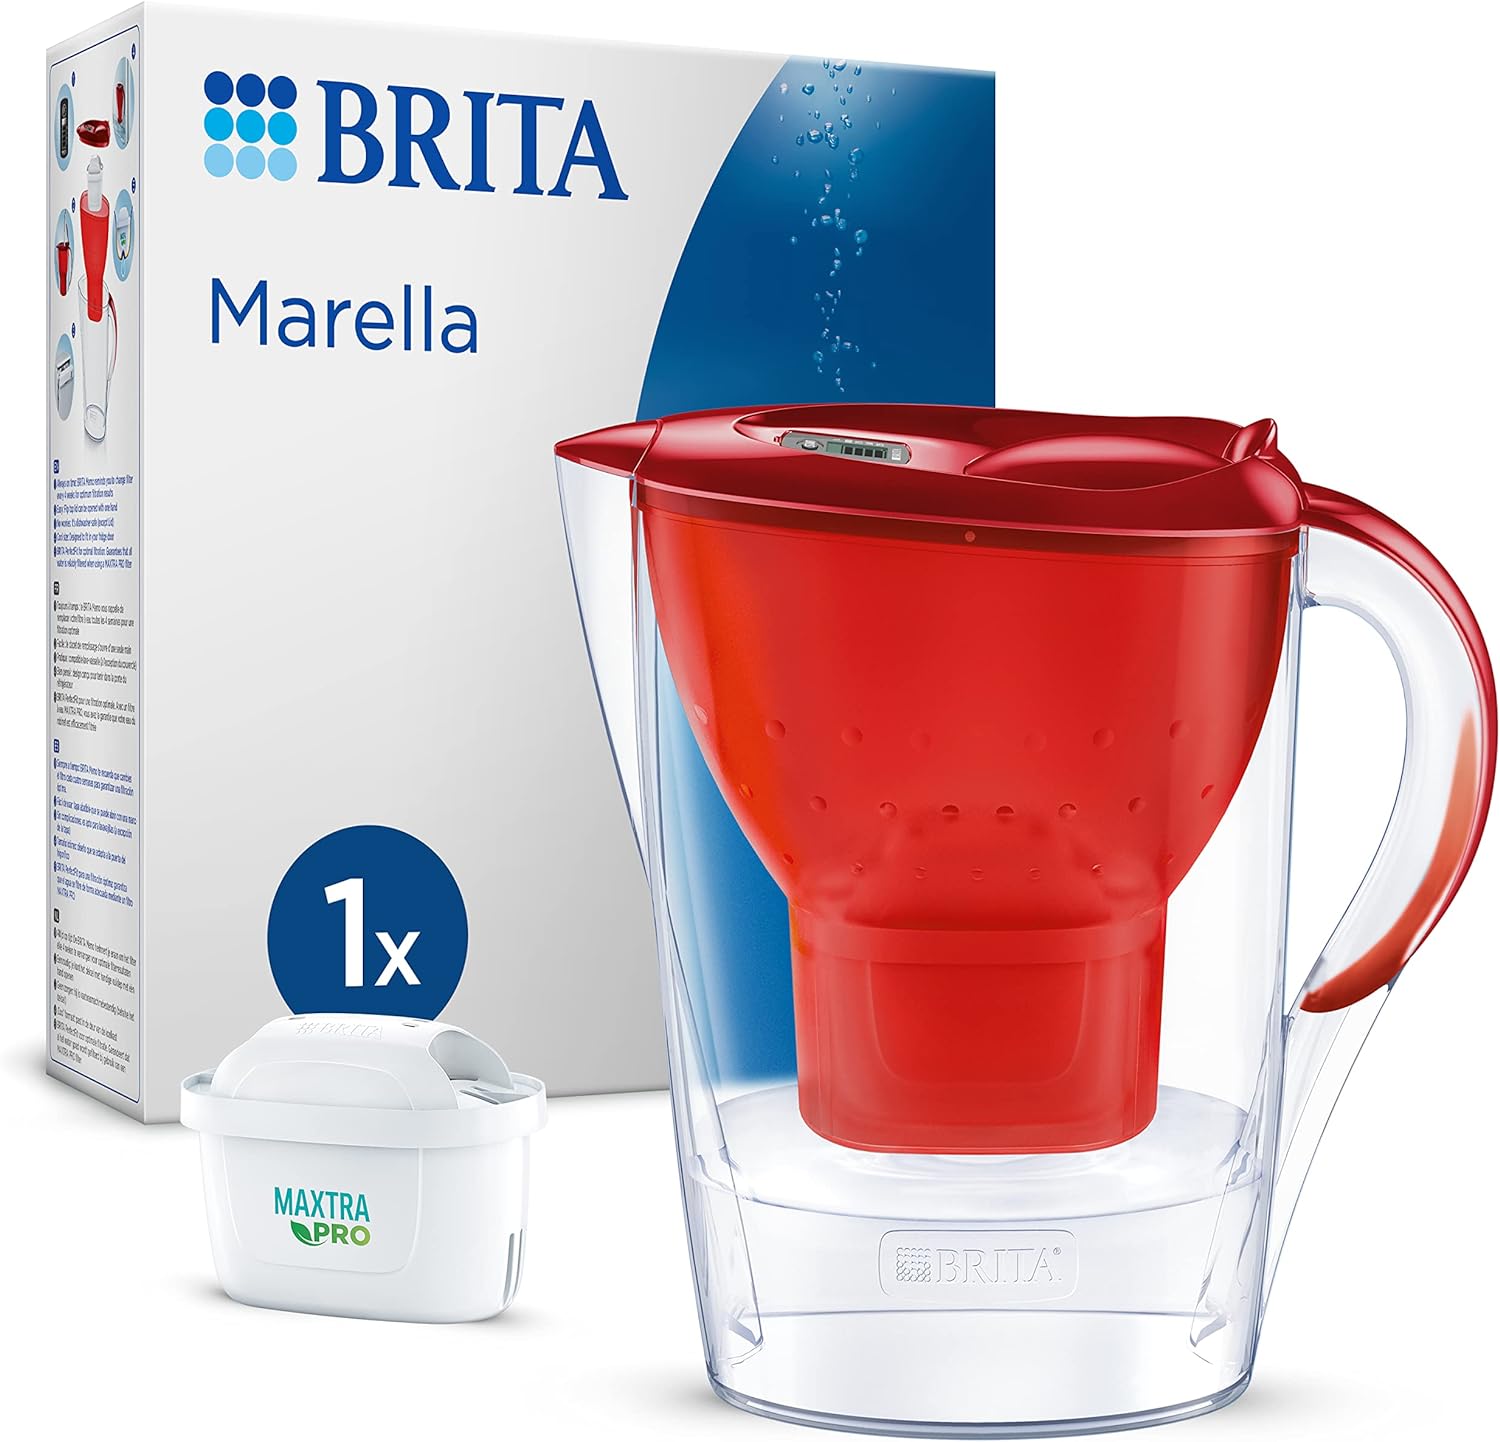 Brita Filter Carafe 2.4L + 2 Filters